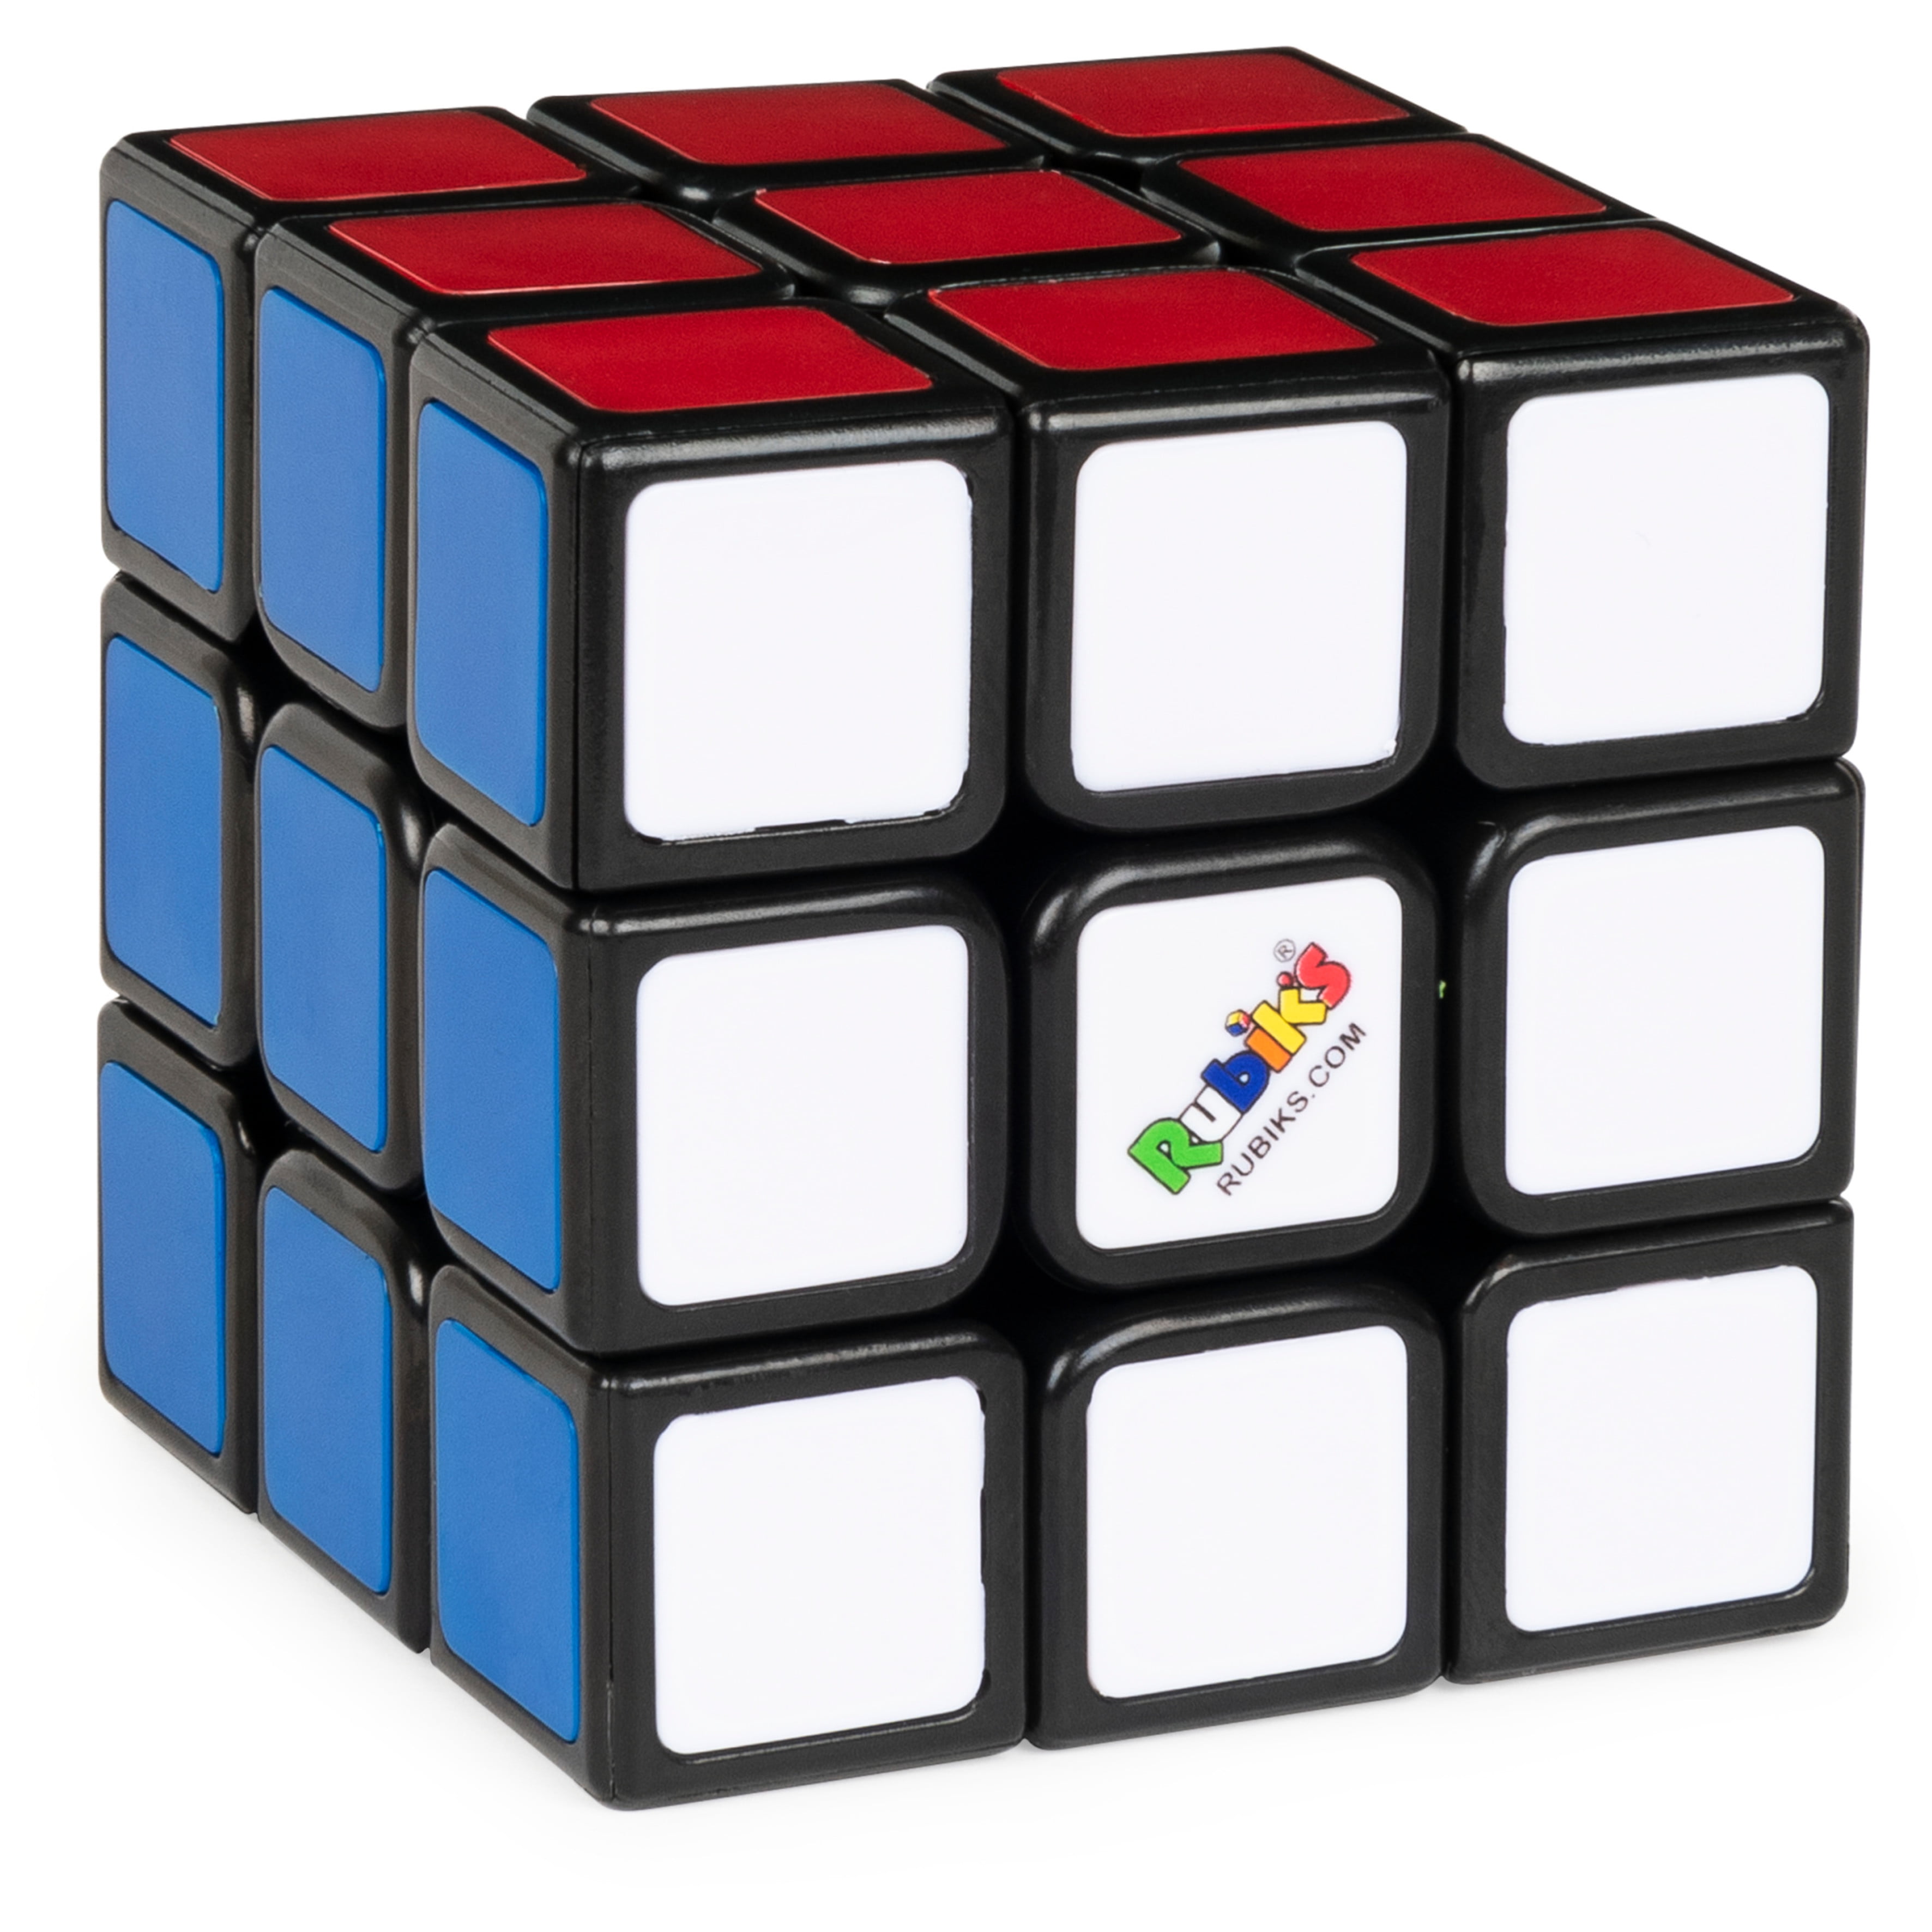 NEW IN BOX  Drumond Park 3 x 3 x 3 Rubik's Rubiks Cube & Rubik's 360 Puzzle 